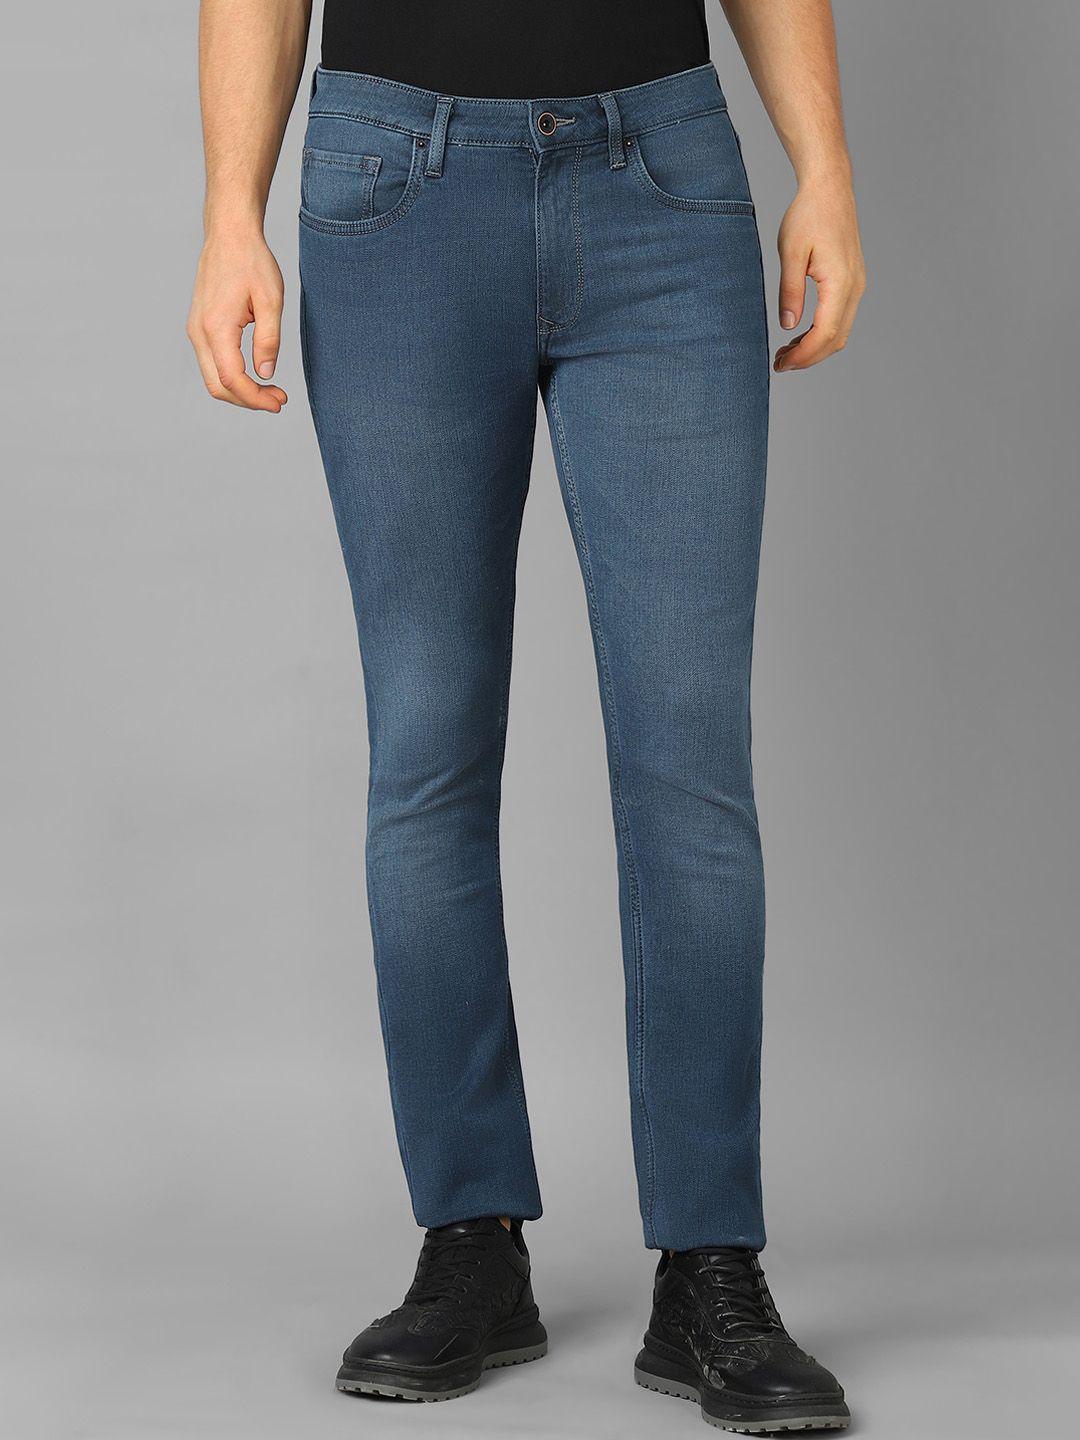 louis philippe jeans men mid-rise slim fit clean look light fade jeans